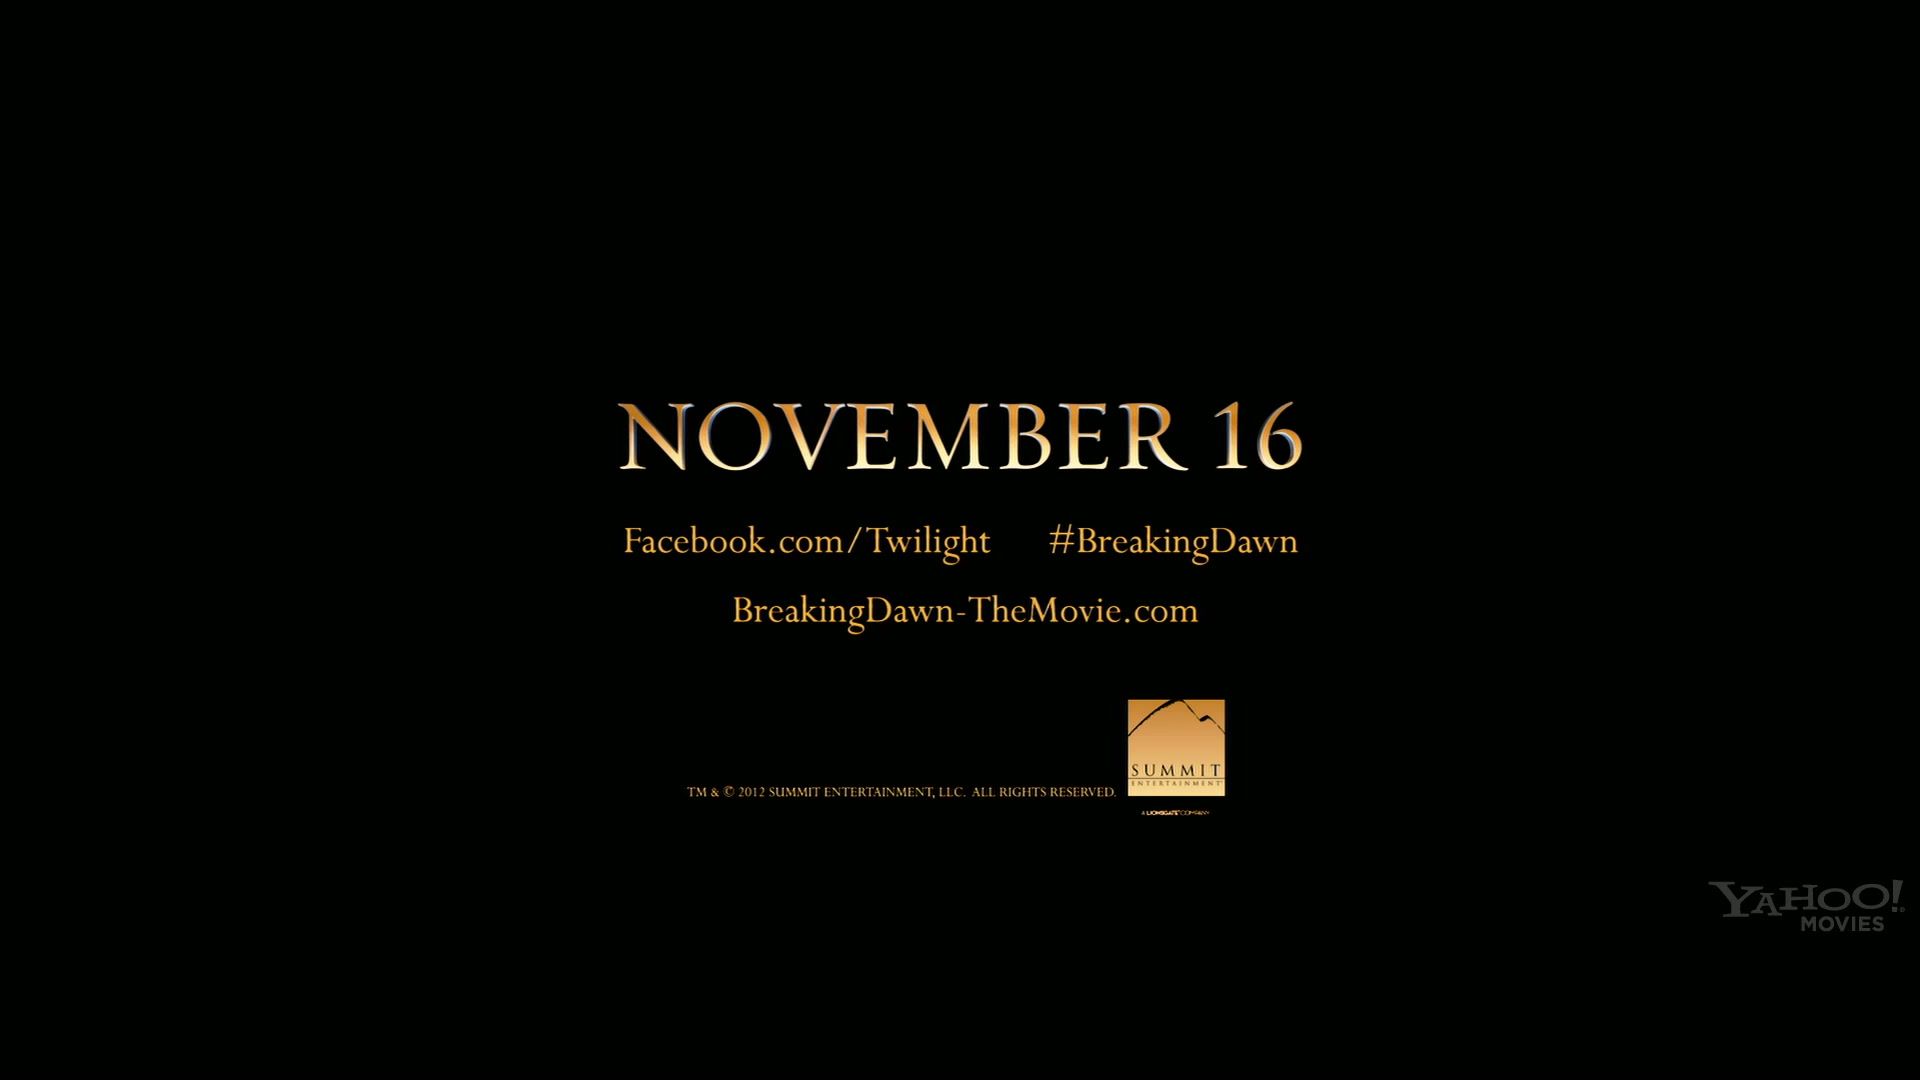 twilight saga, Crepúsculo, Robert Pattinson, promoo, diseño